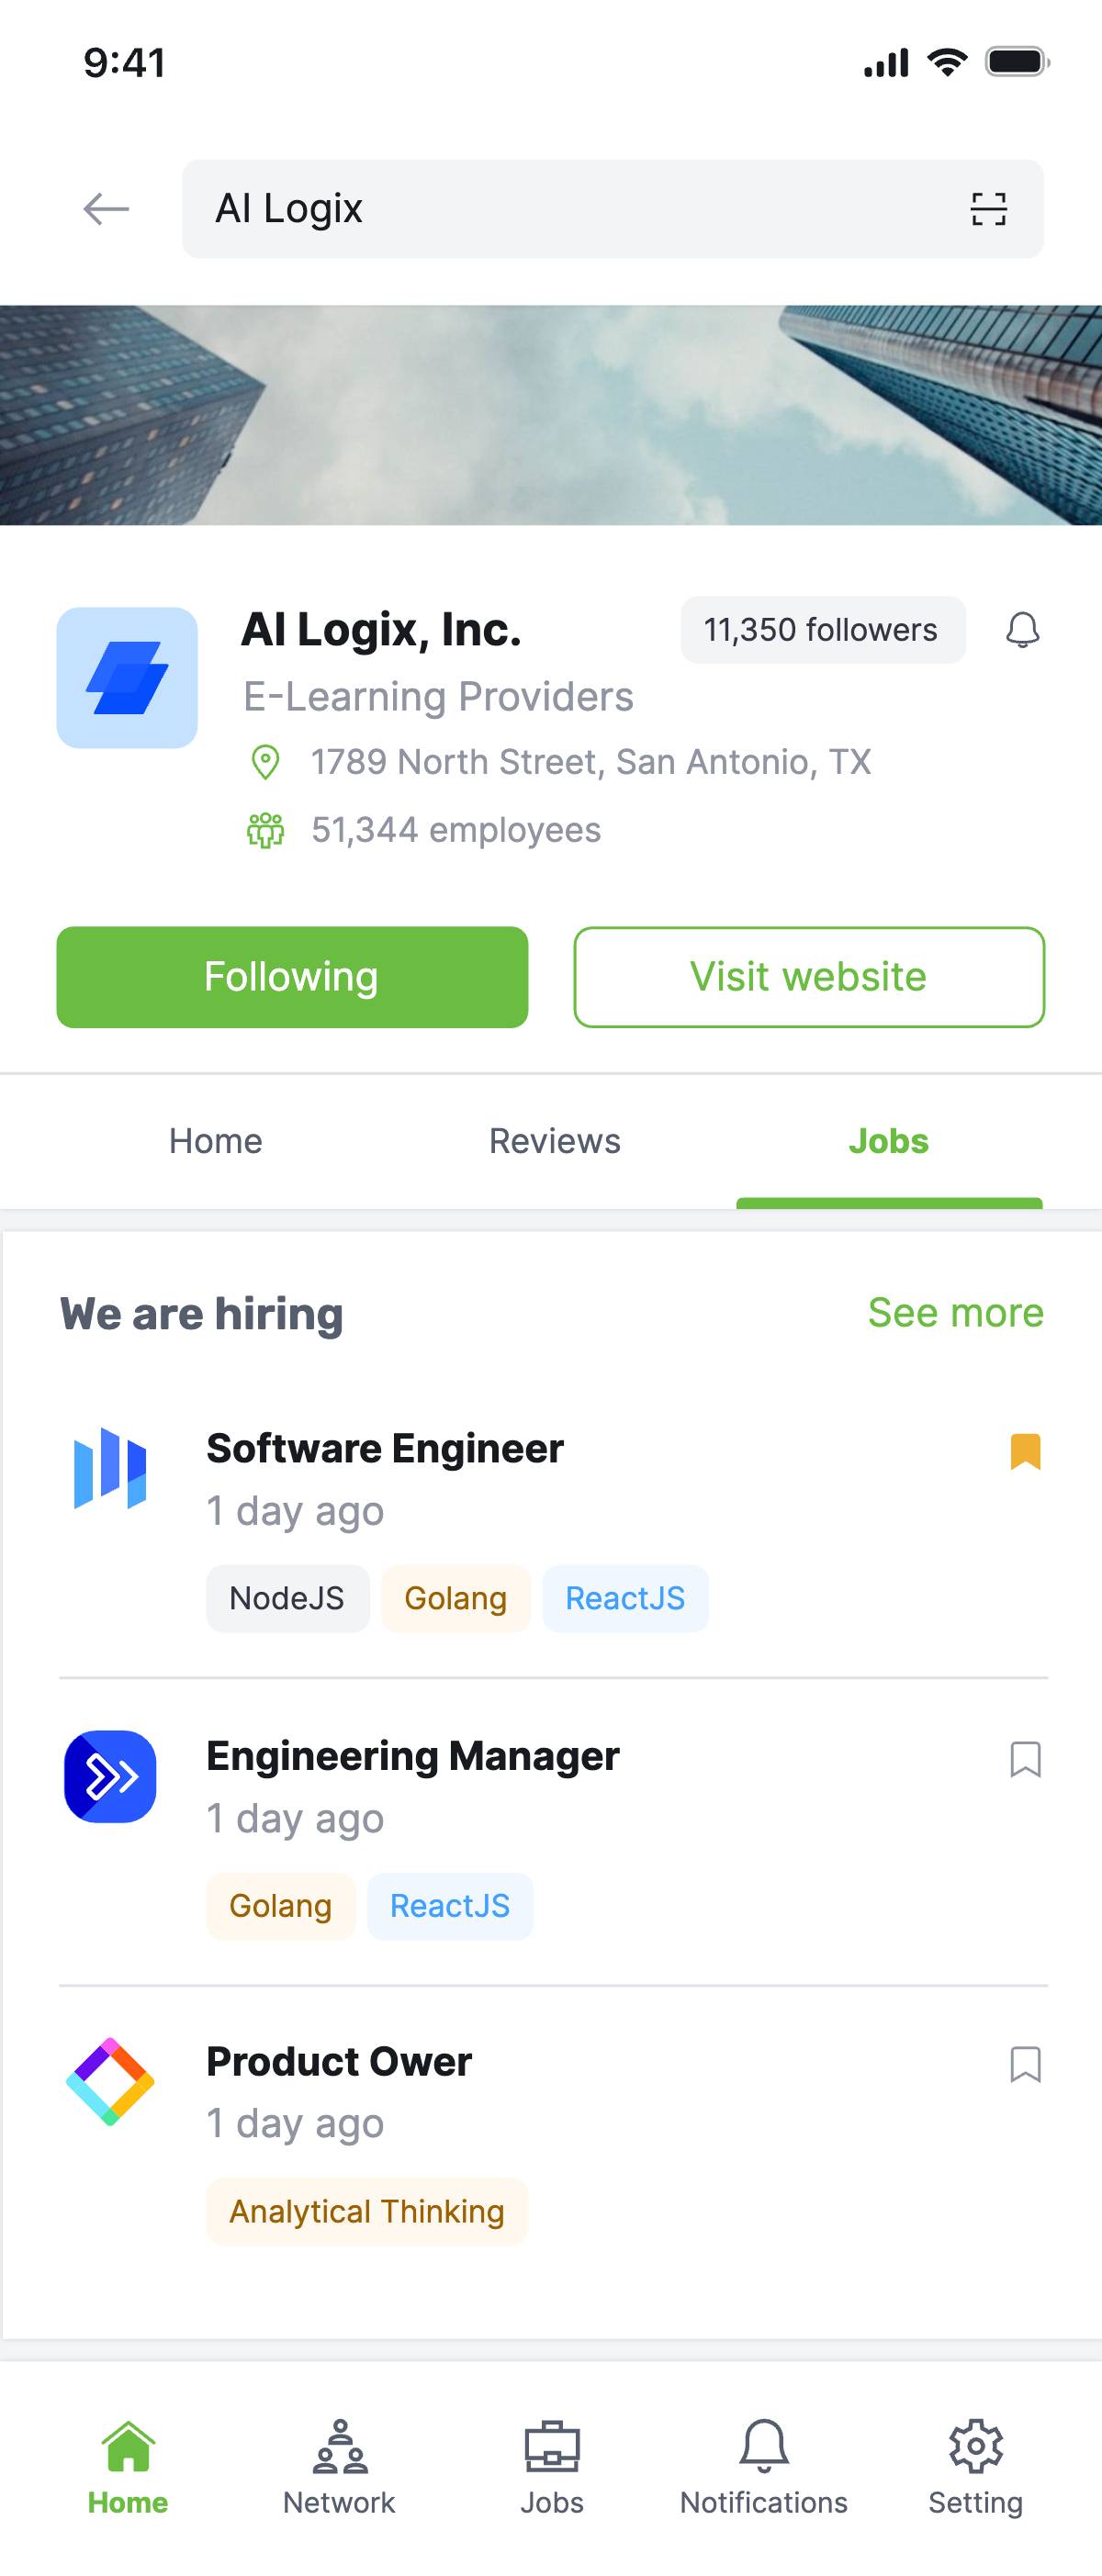 Company profile - Jobs